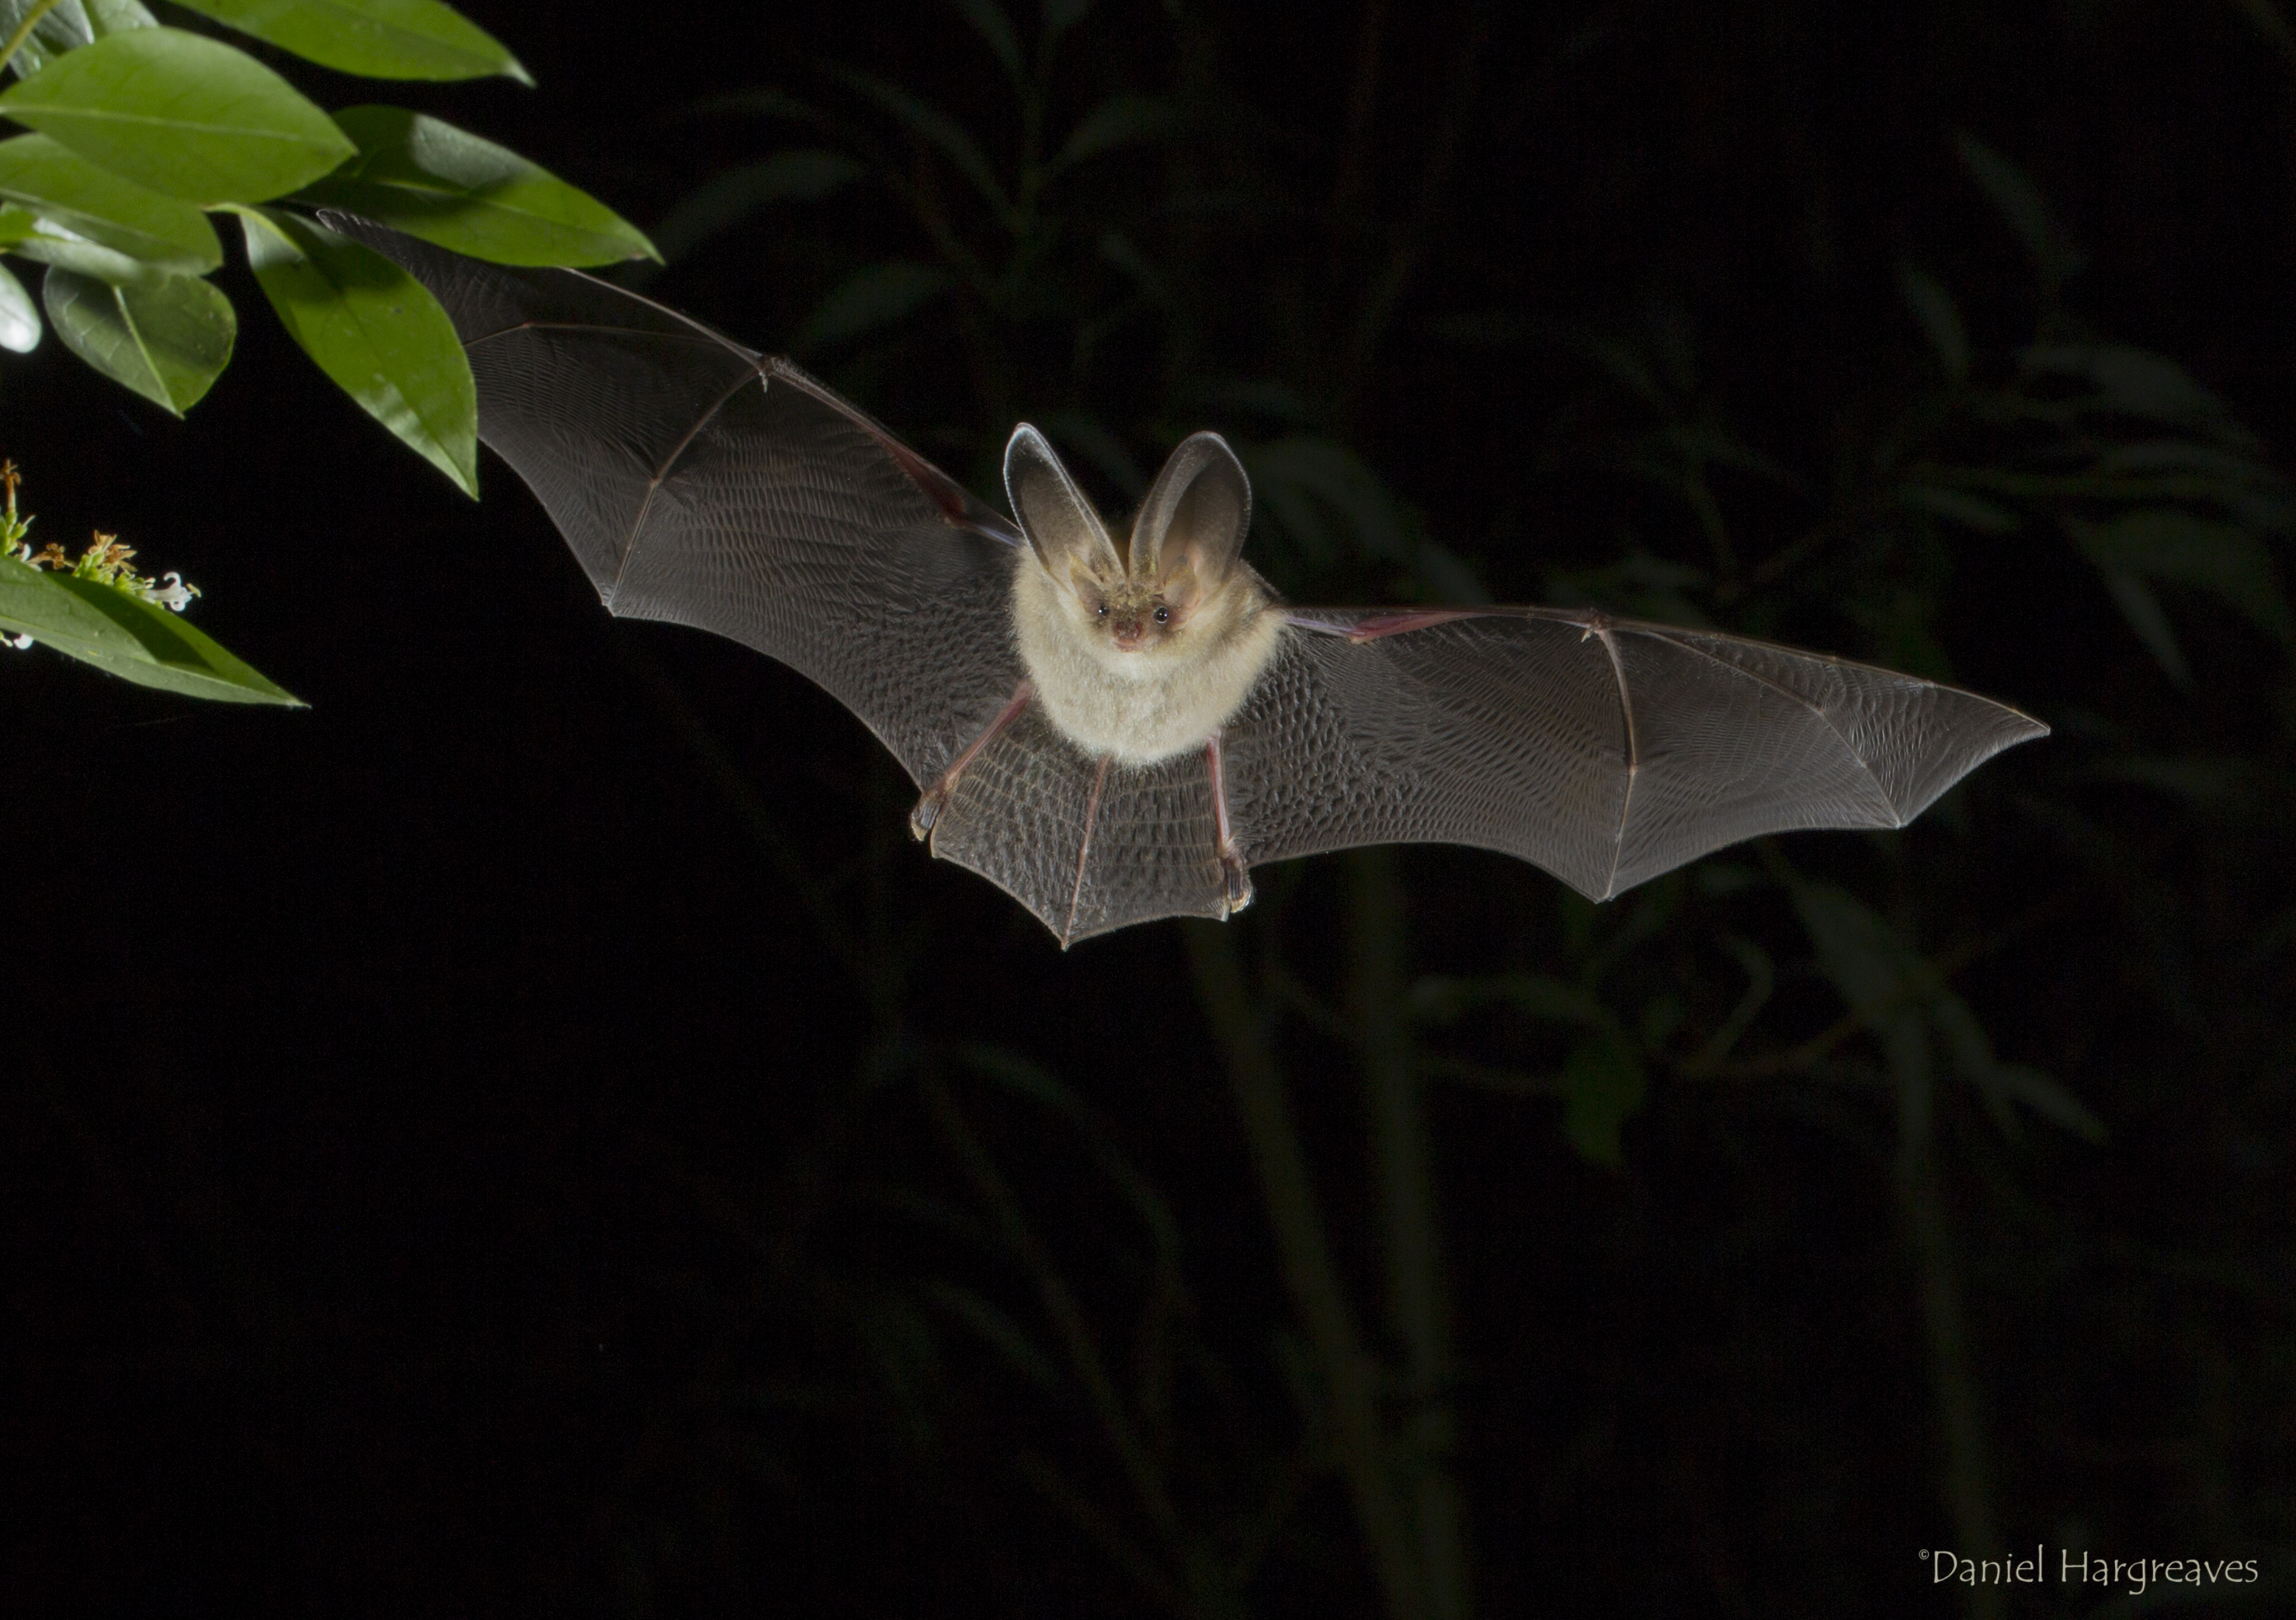 Bat in flight